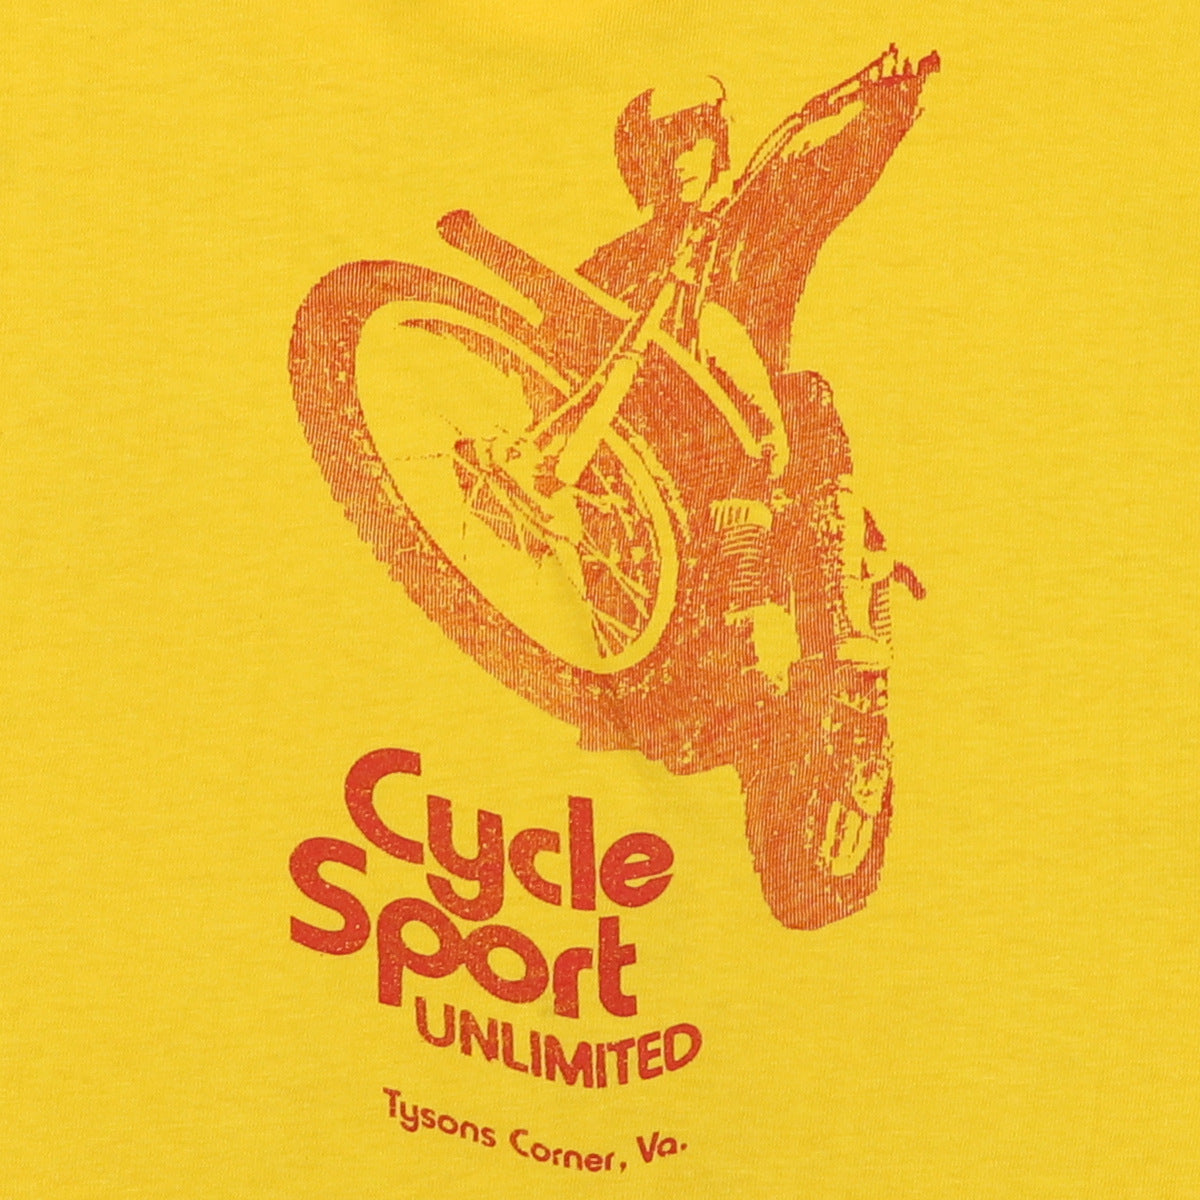 1970s Yamaha Cycle Sport Unlimited Shirt